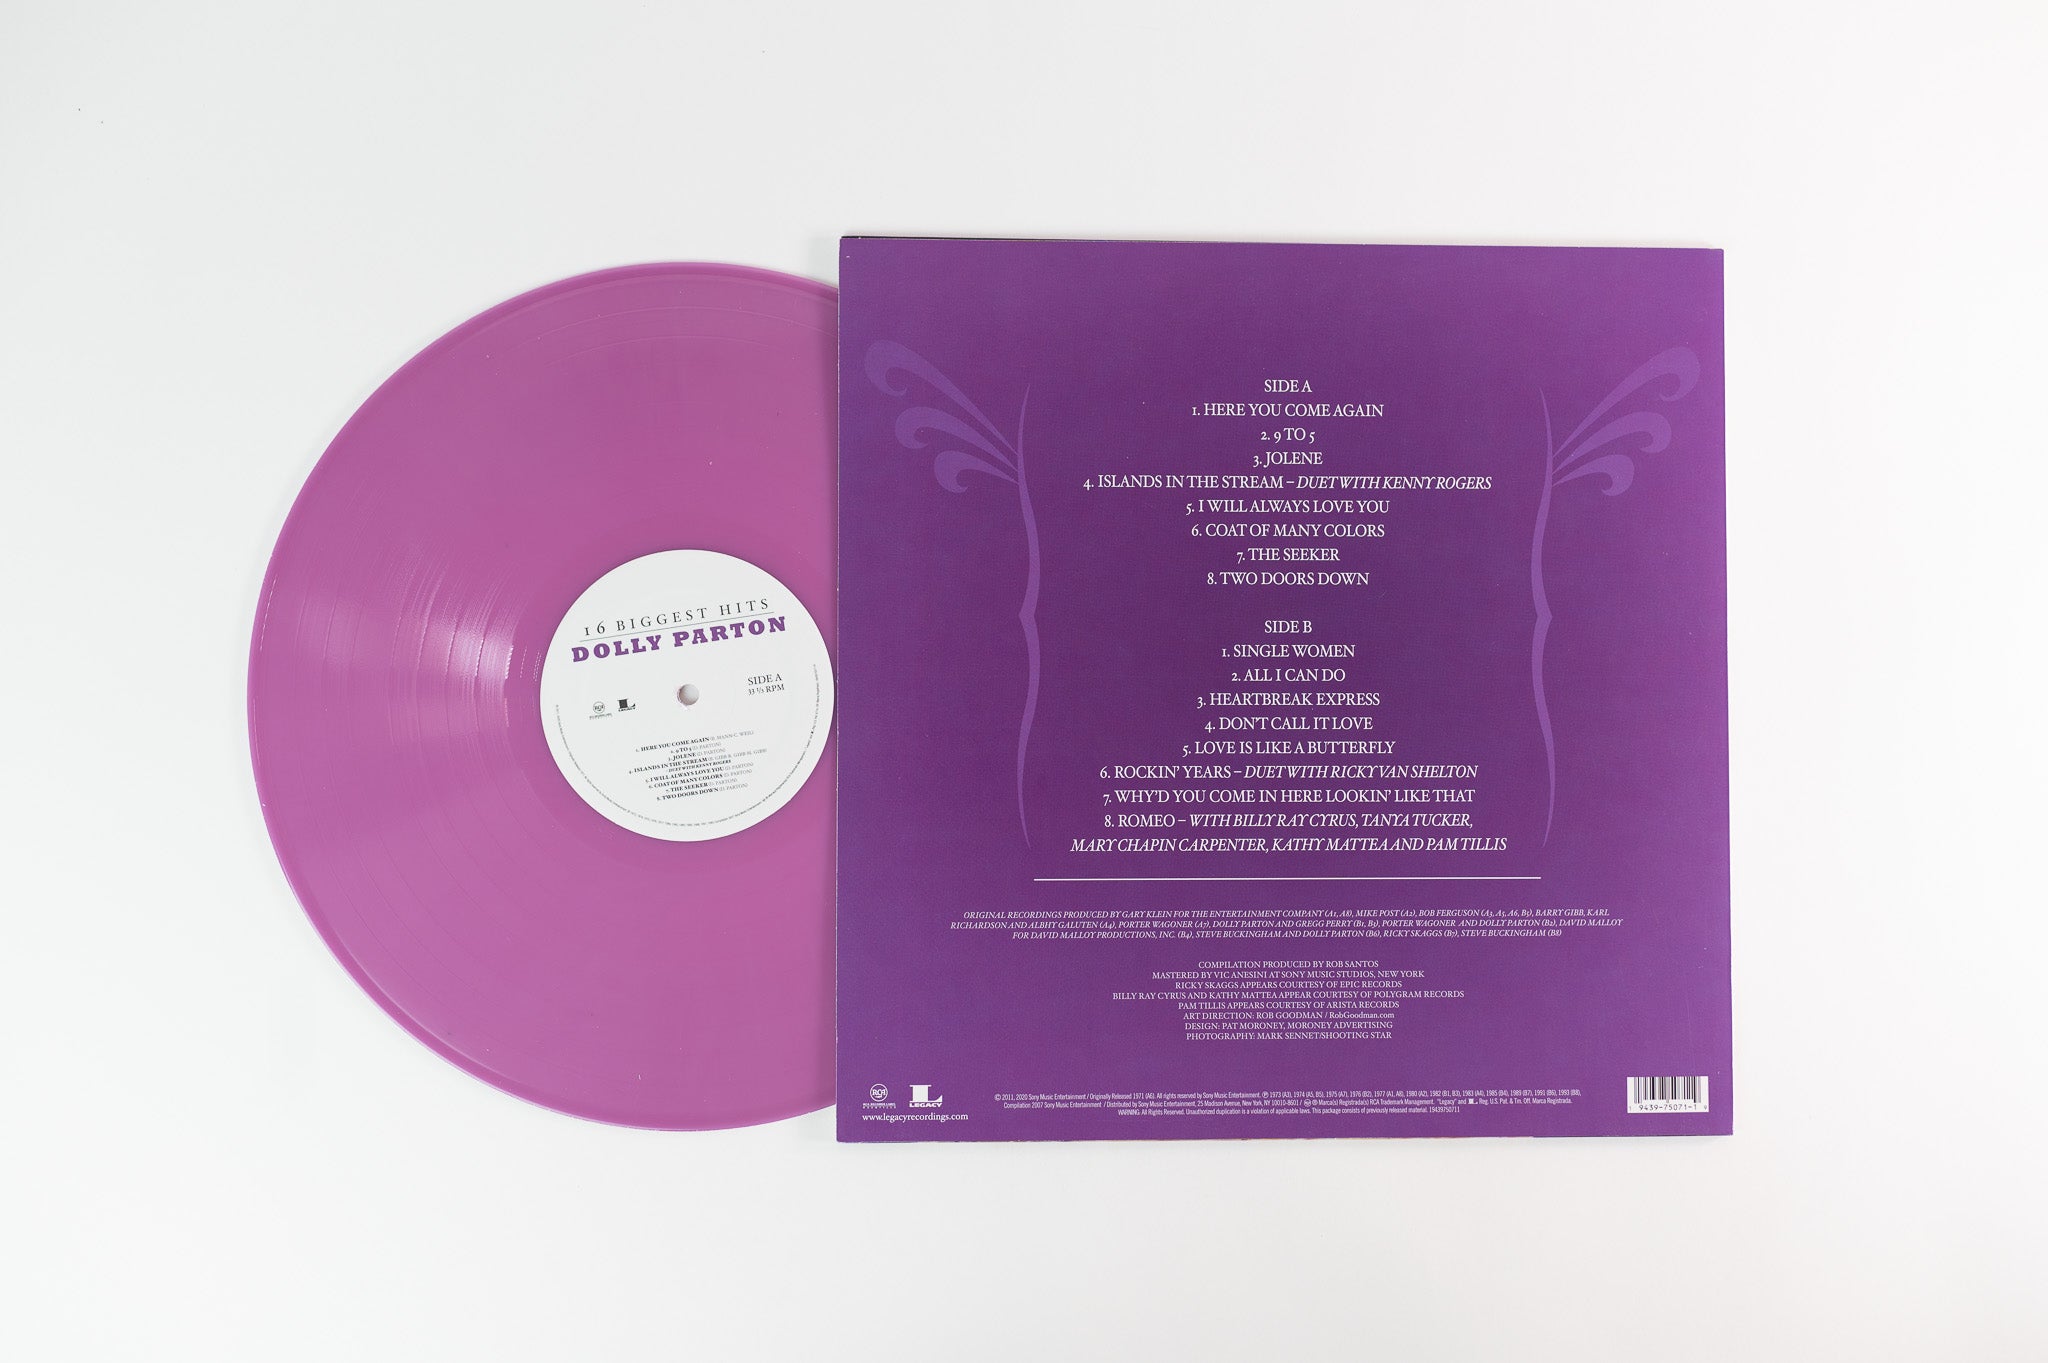 Dolly Parton - 16 Biggest Hits on RCA Nashville Purple Vinyl